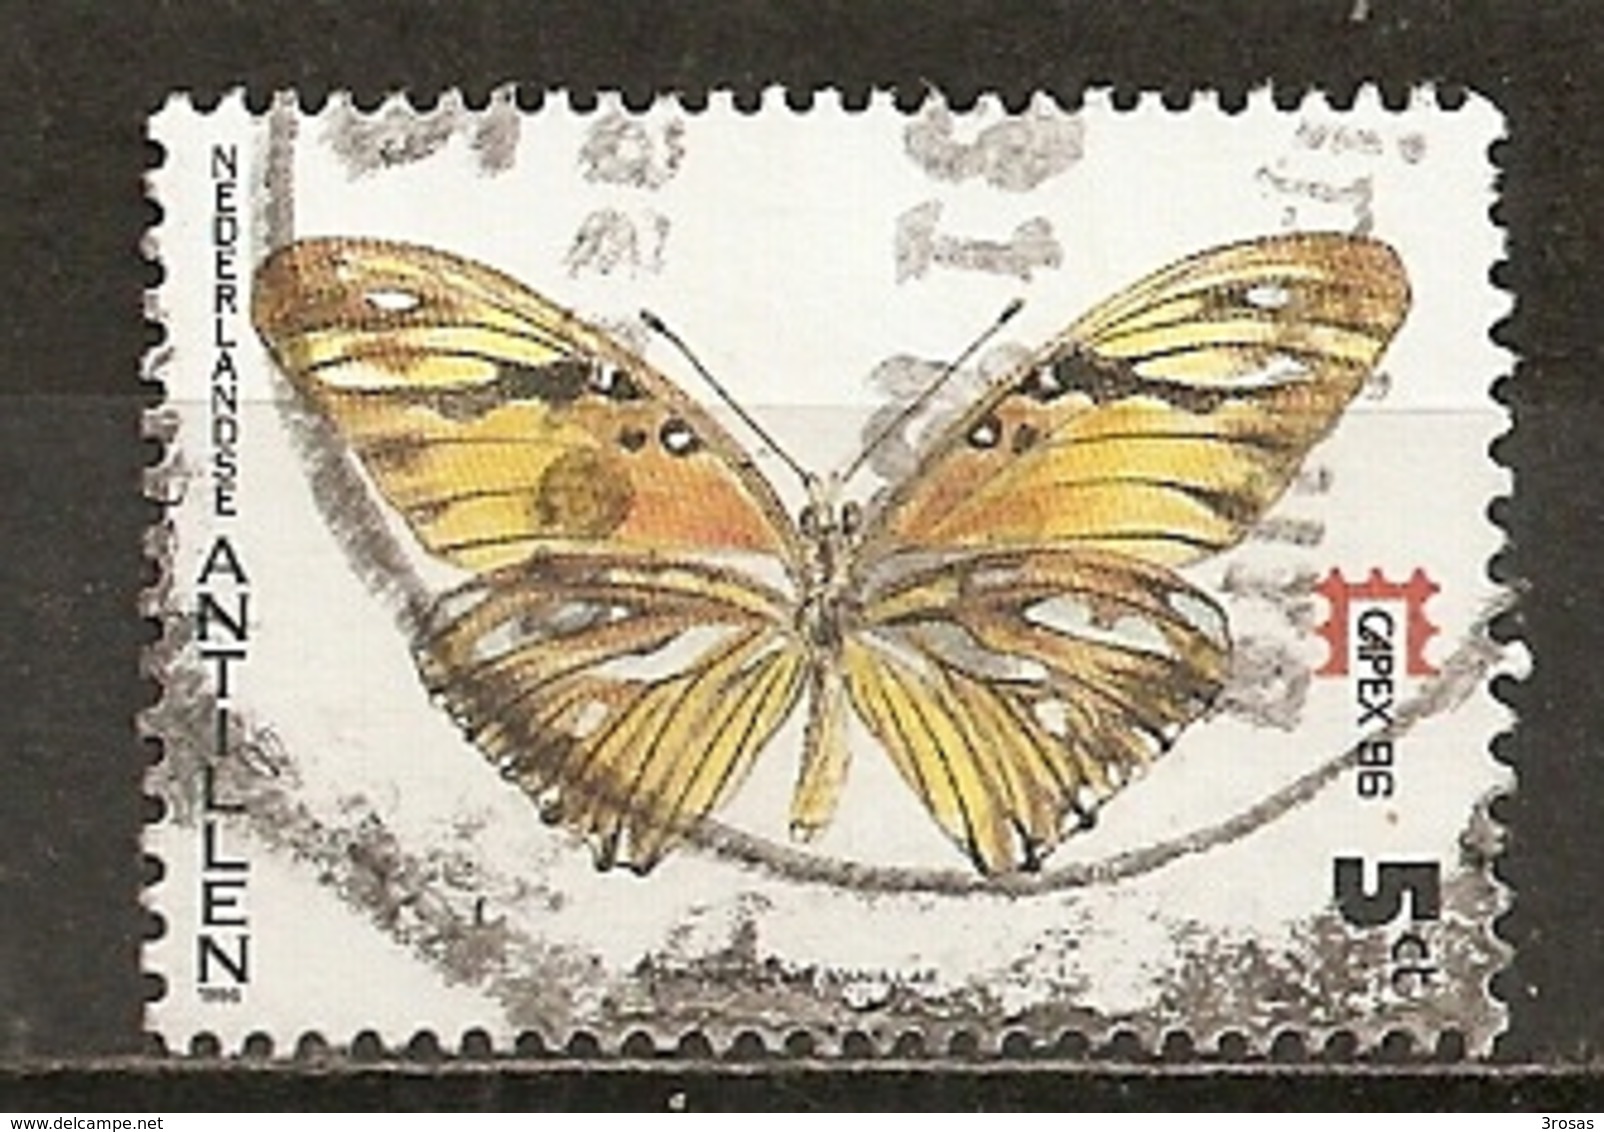 Antilles Neerlandaise Netherlands Antilles 1986 Papillon Butterfly Obl - Curaçao, Antilles Neérlandaises, Aruba